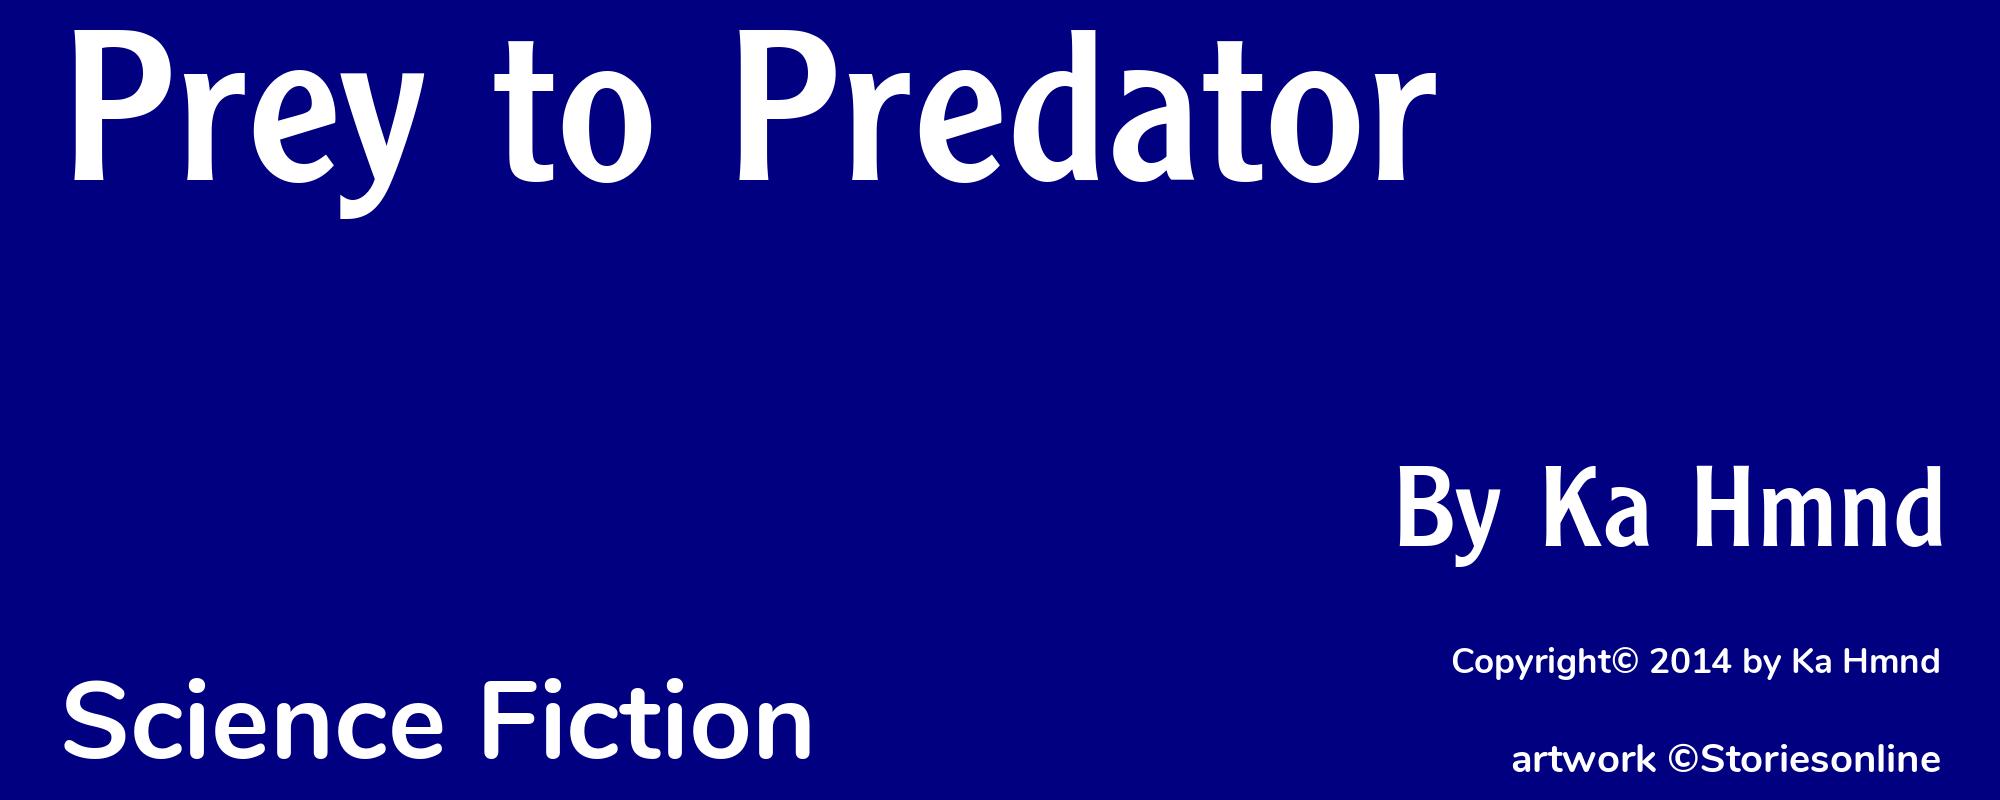 Prey to Predator - Cover